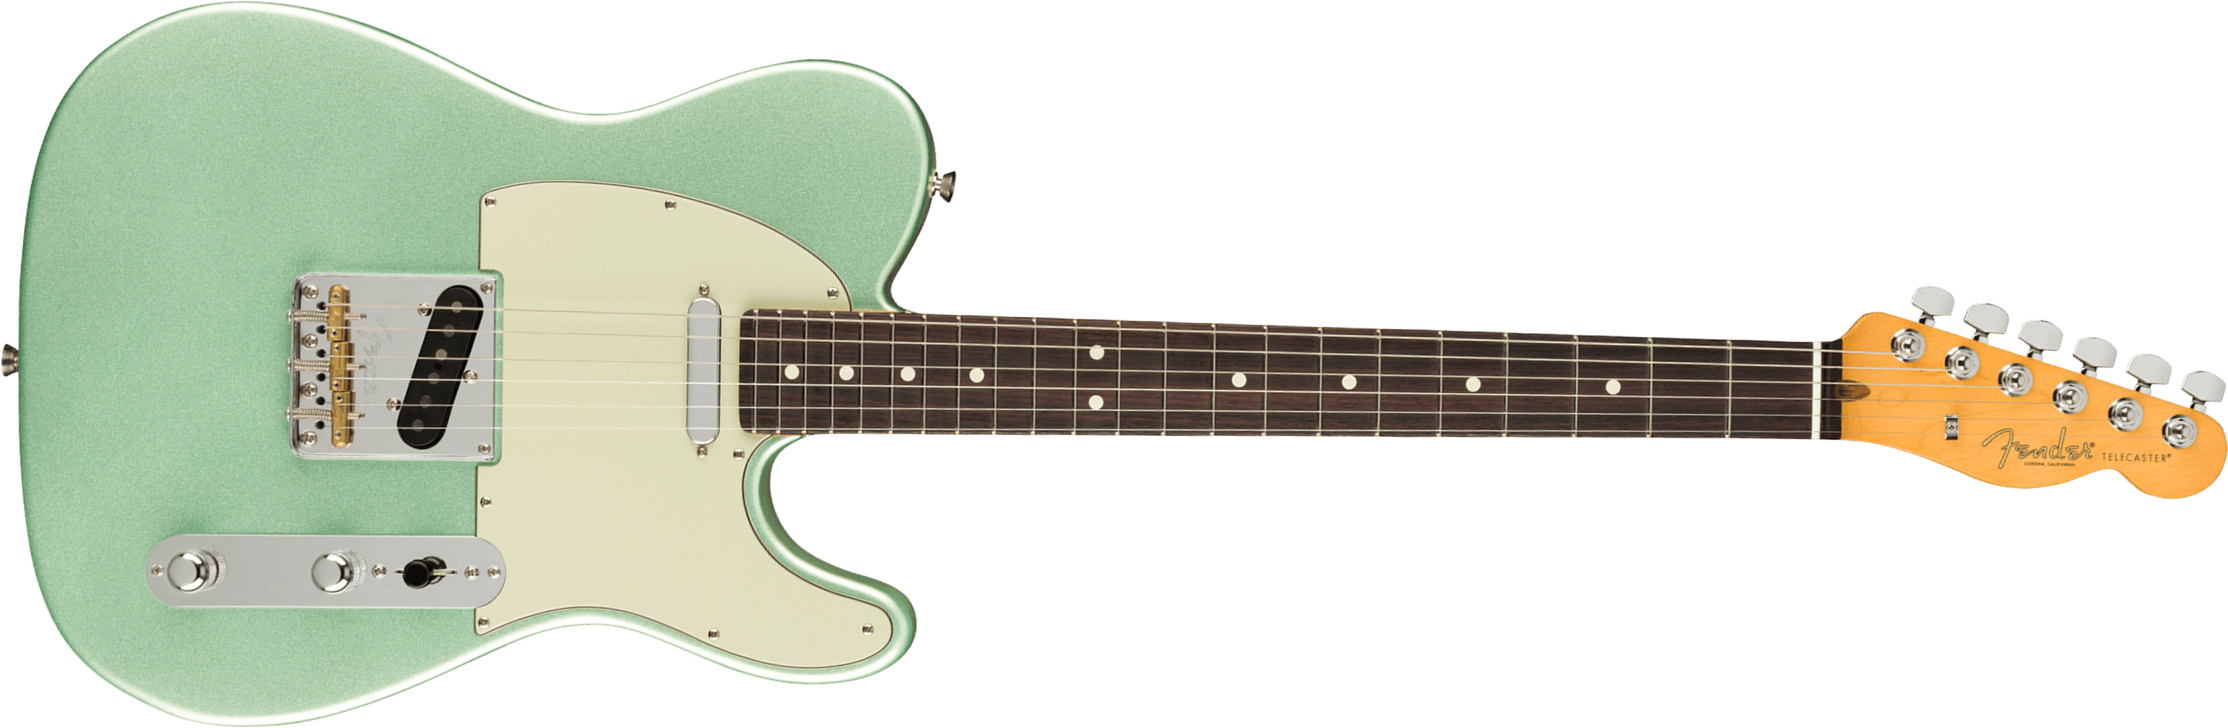 Fender Tele American Professional Ii Usa Rw - Mystic Surf Green - Televorm elektrische gitaar - Main picture